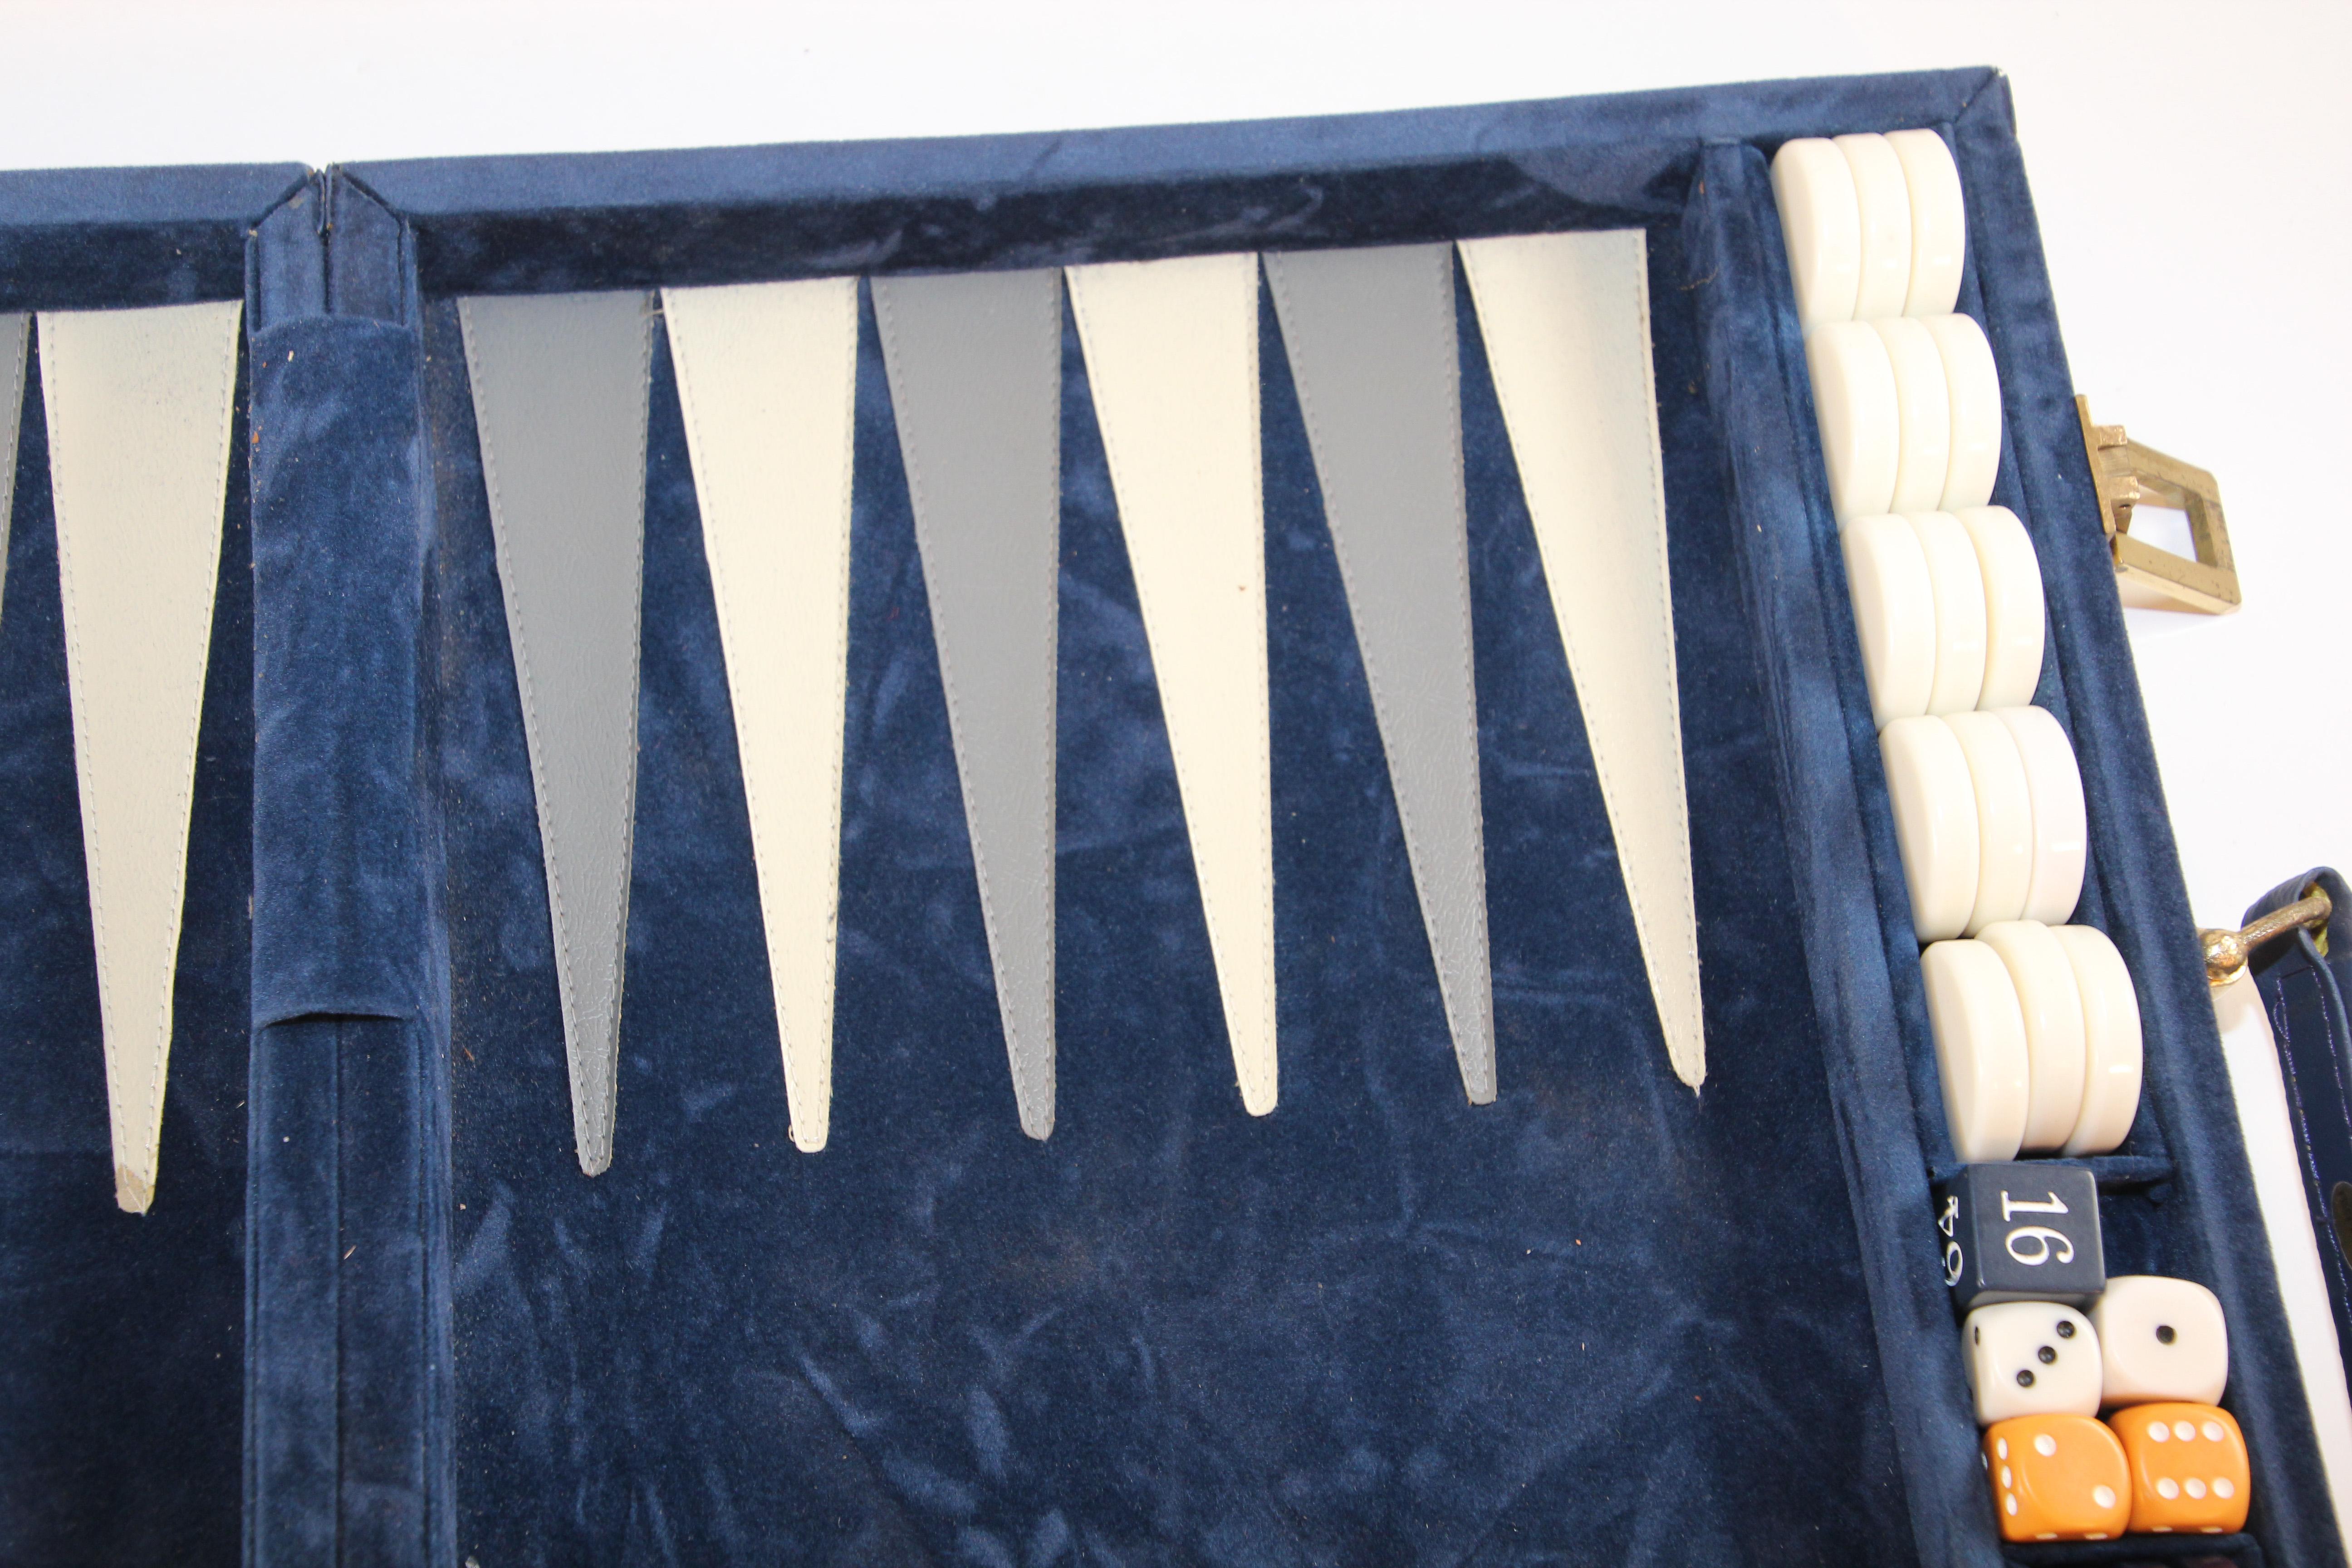 Vintage Aries Backgammon Set in a Blue Briefcase 1970s  1